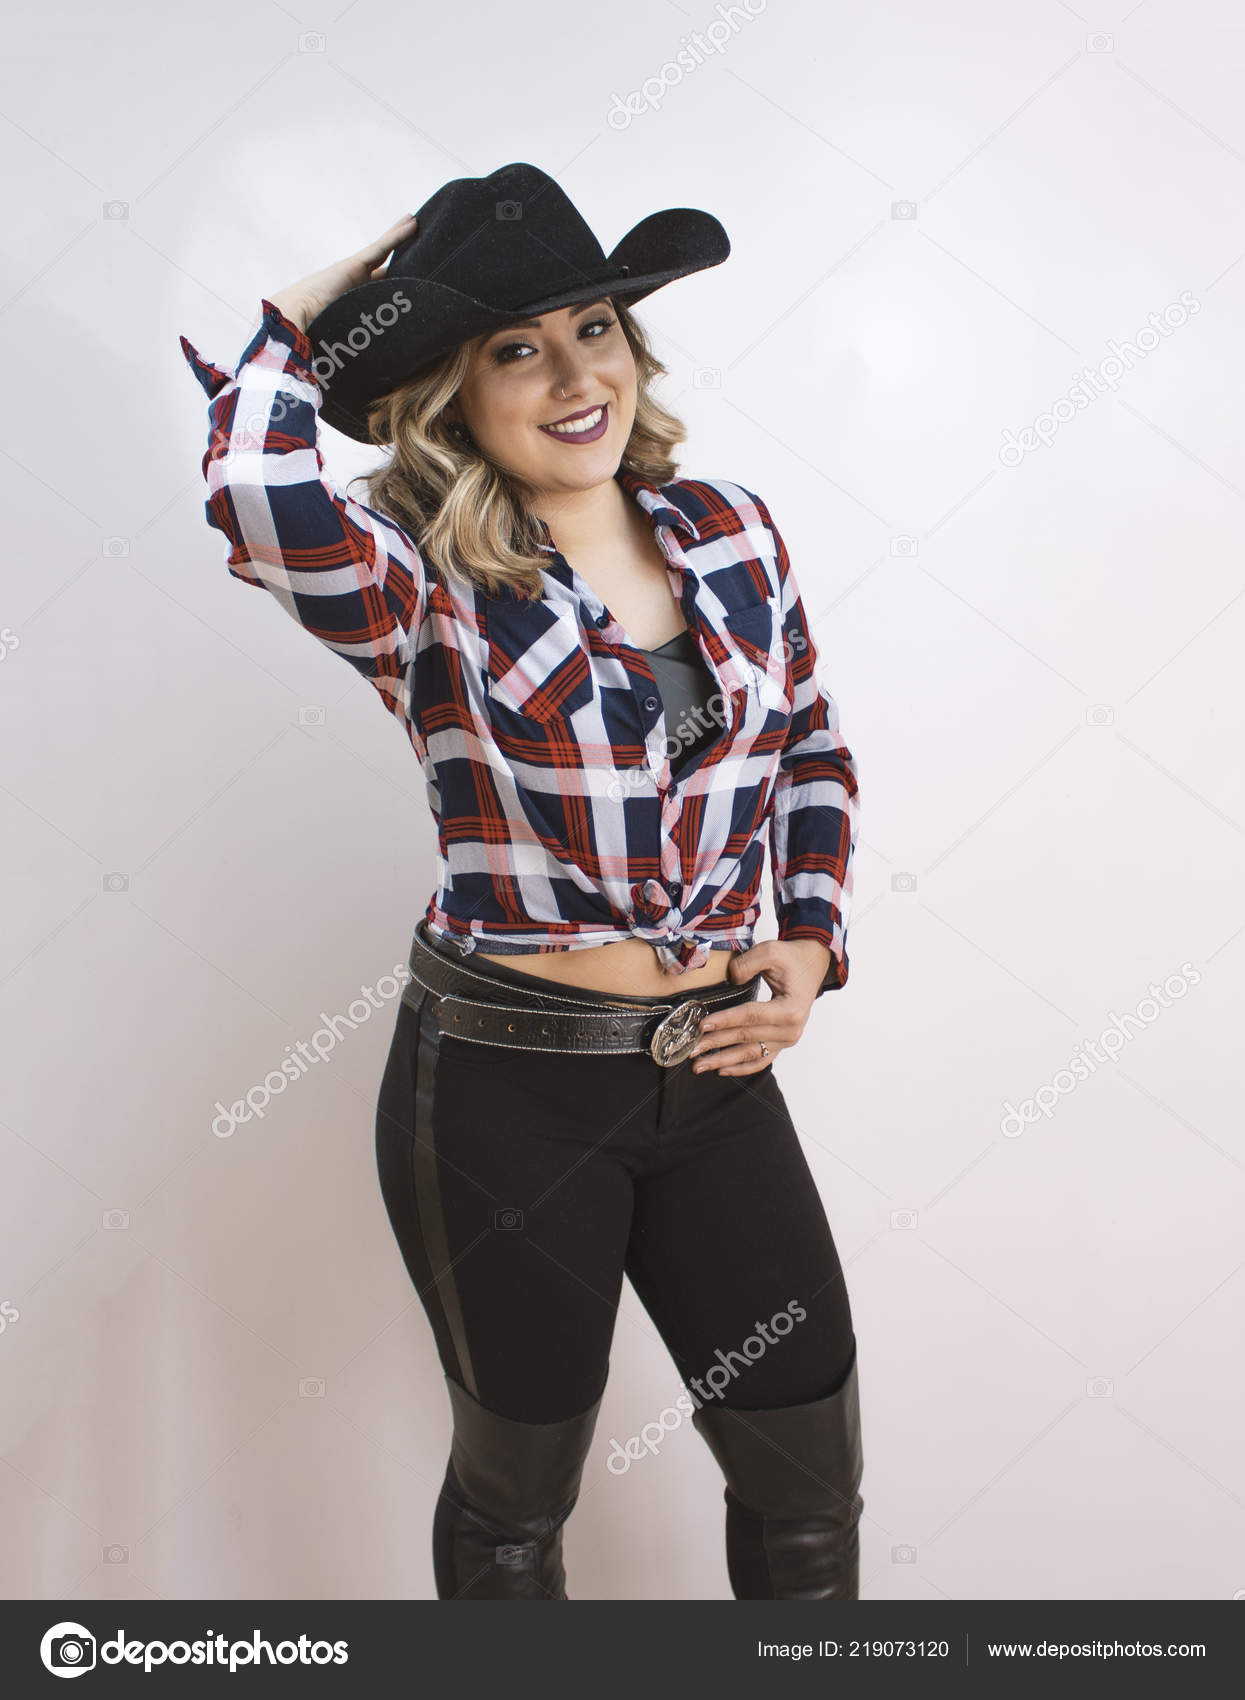 cowboy style girl